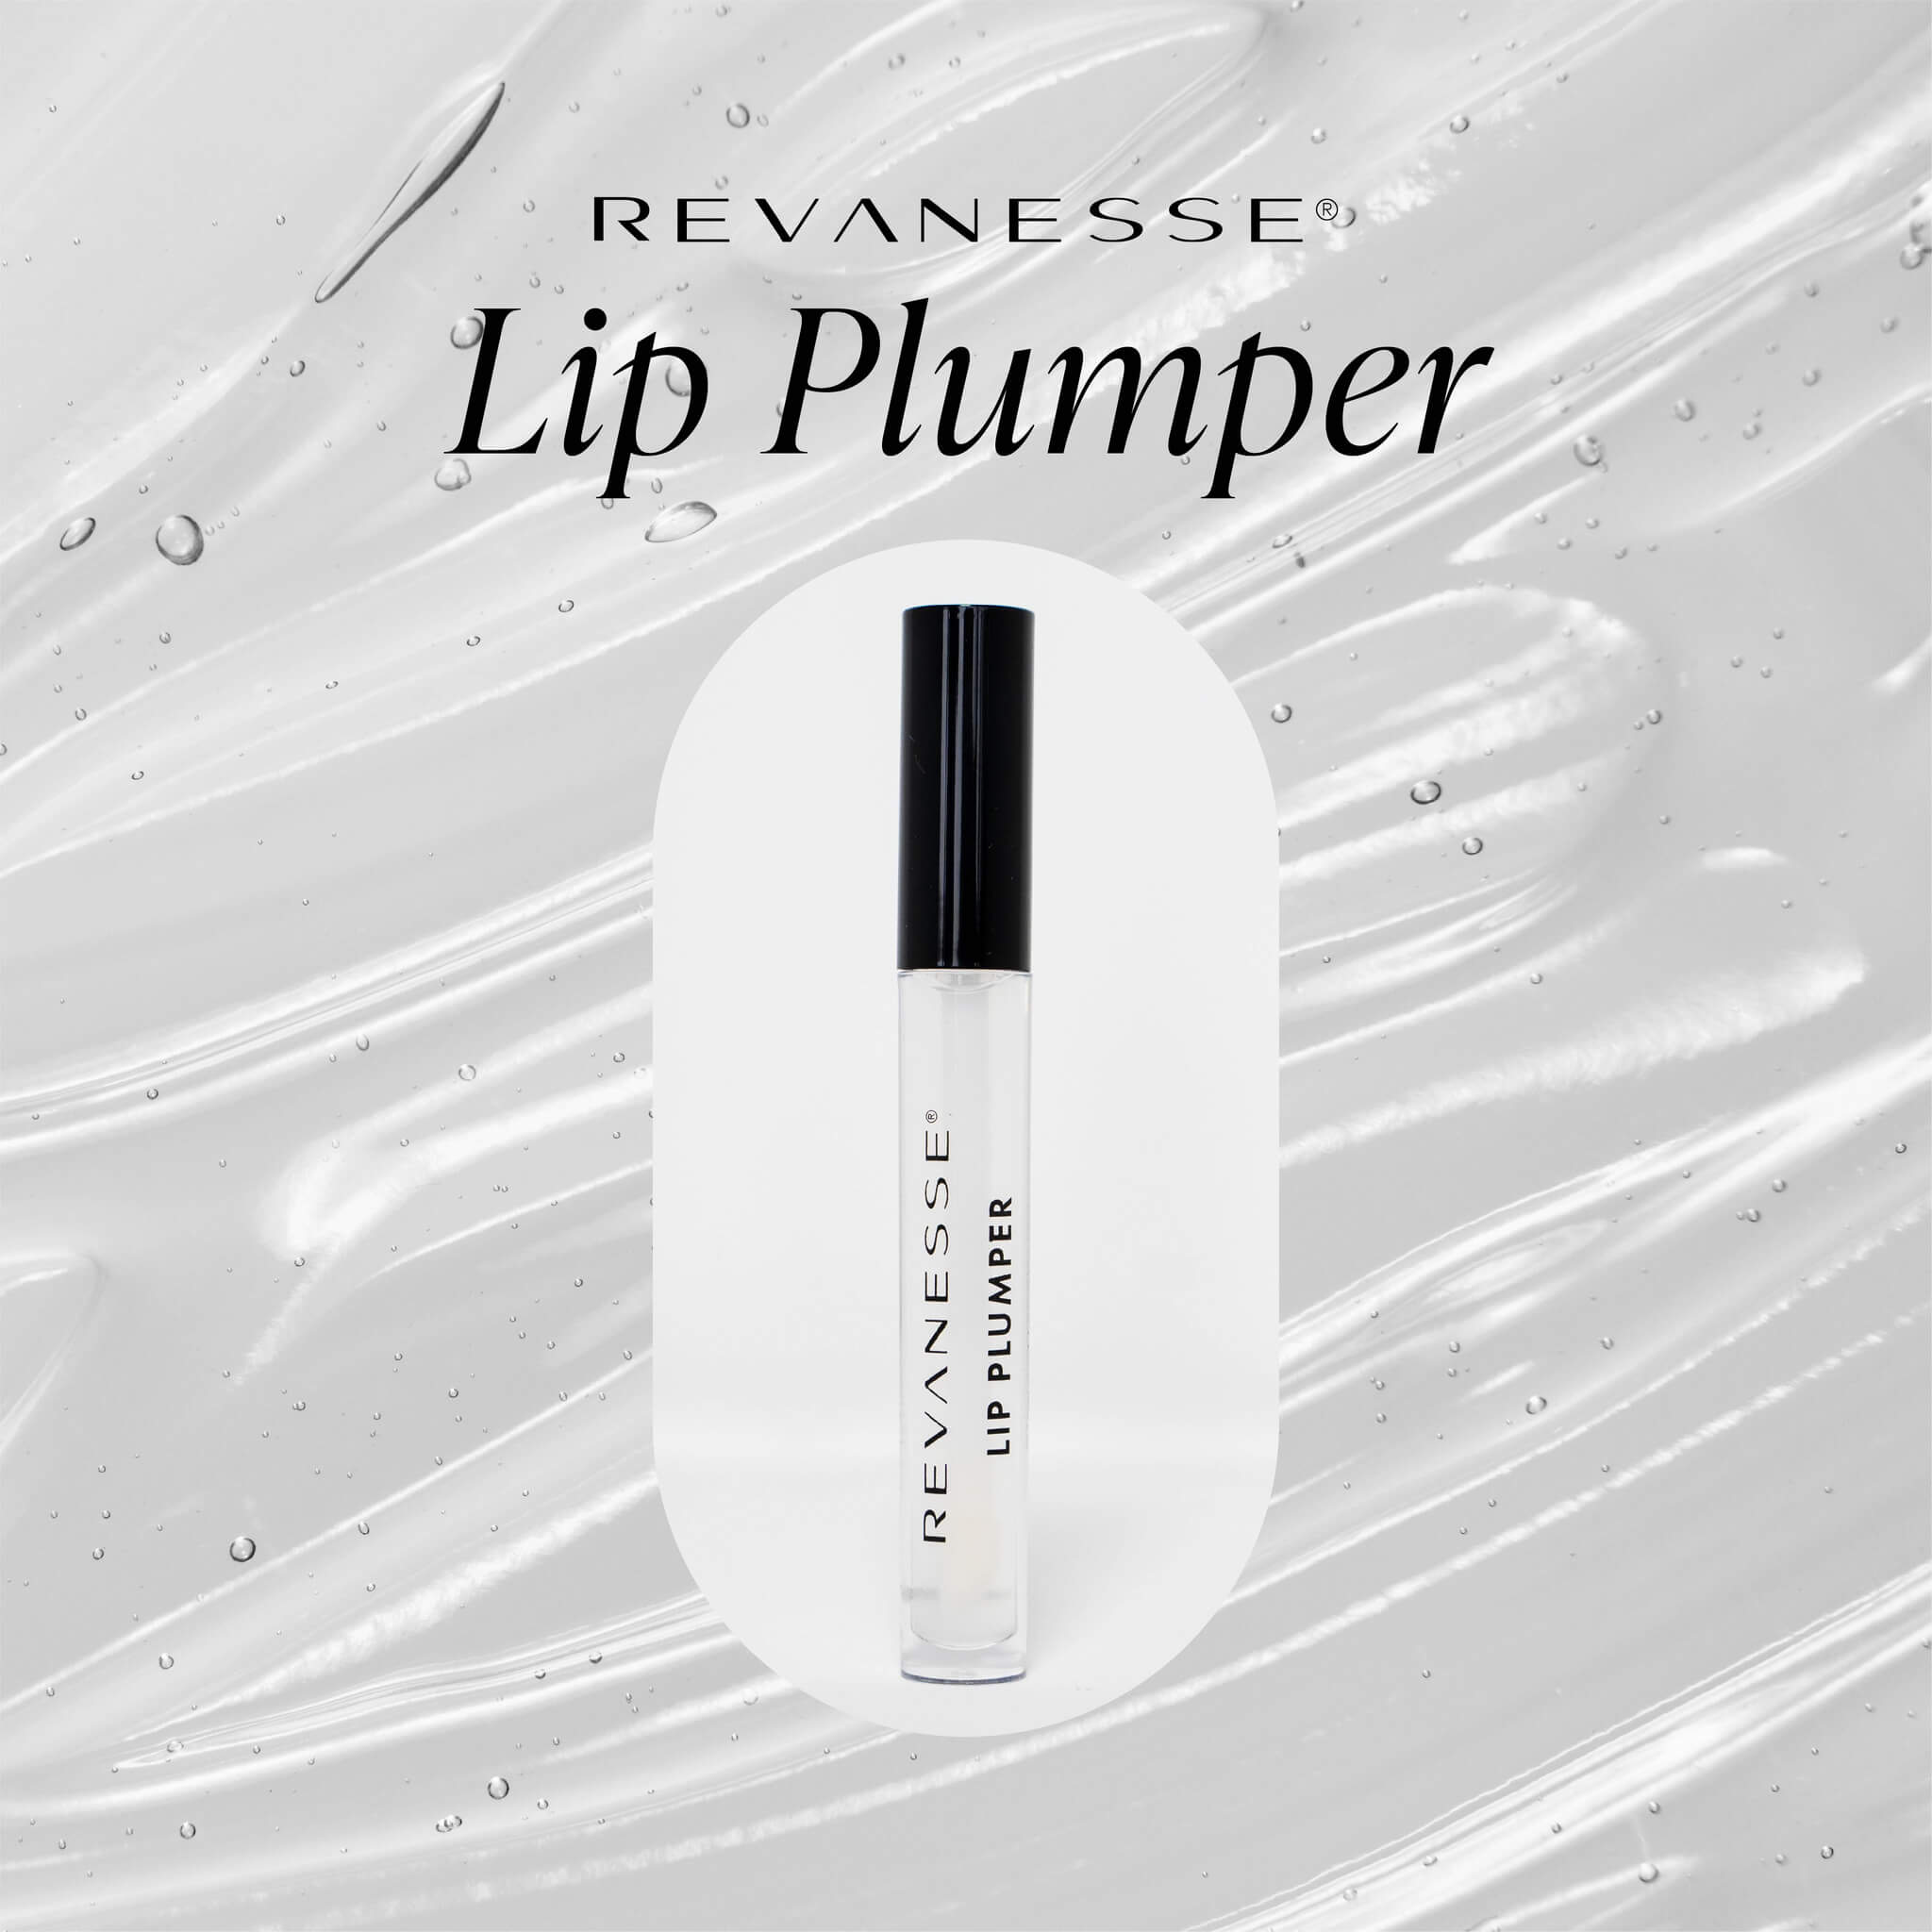 Revenesse Lip Plumper The First Glance